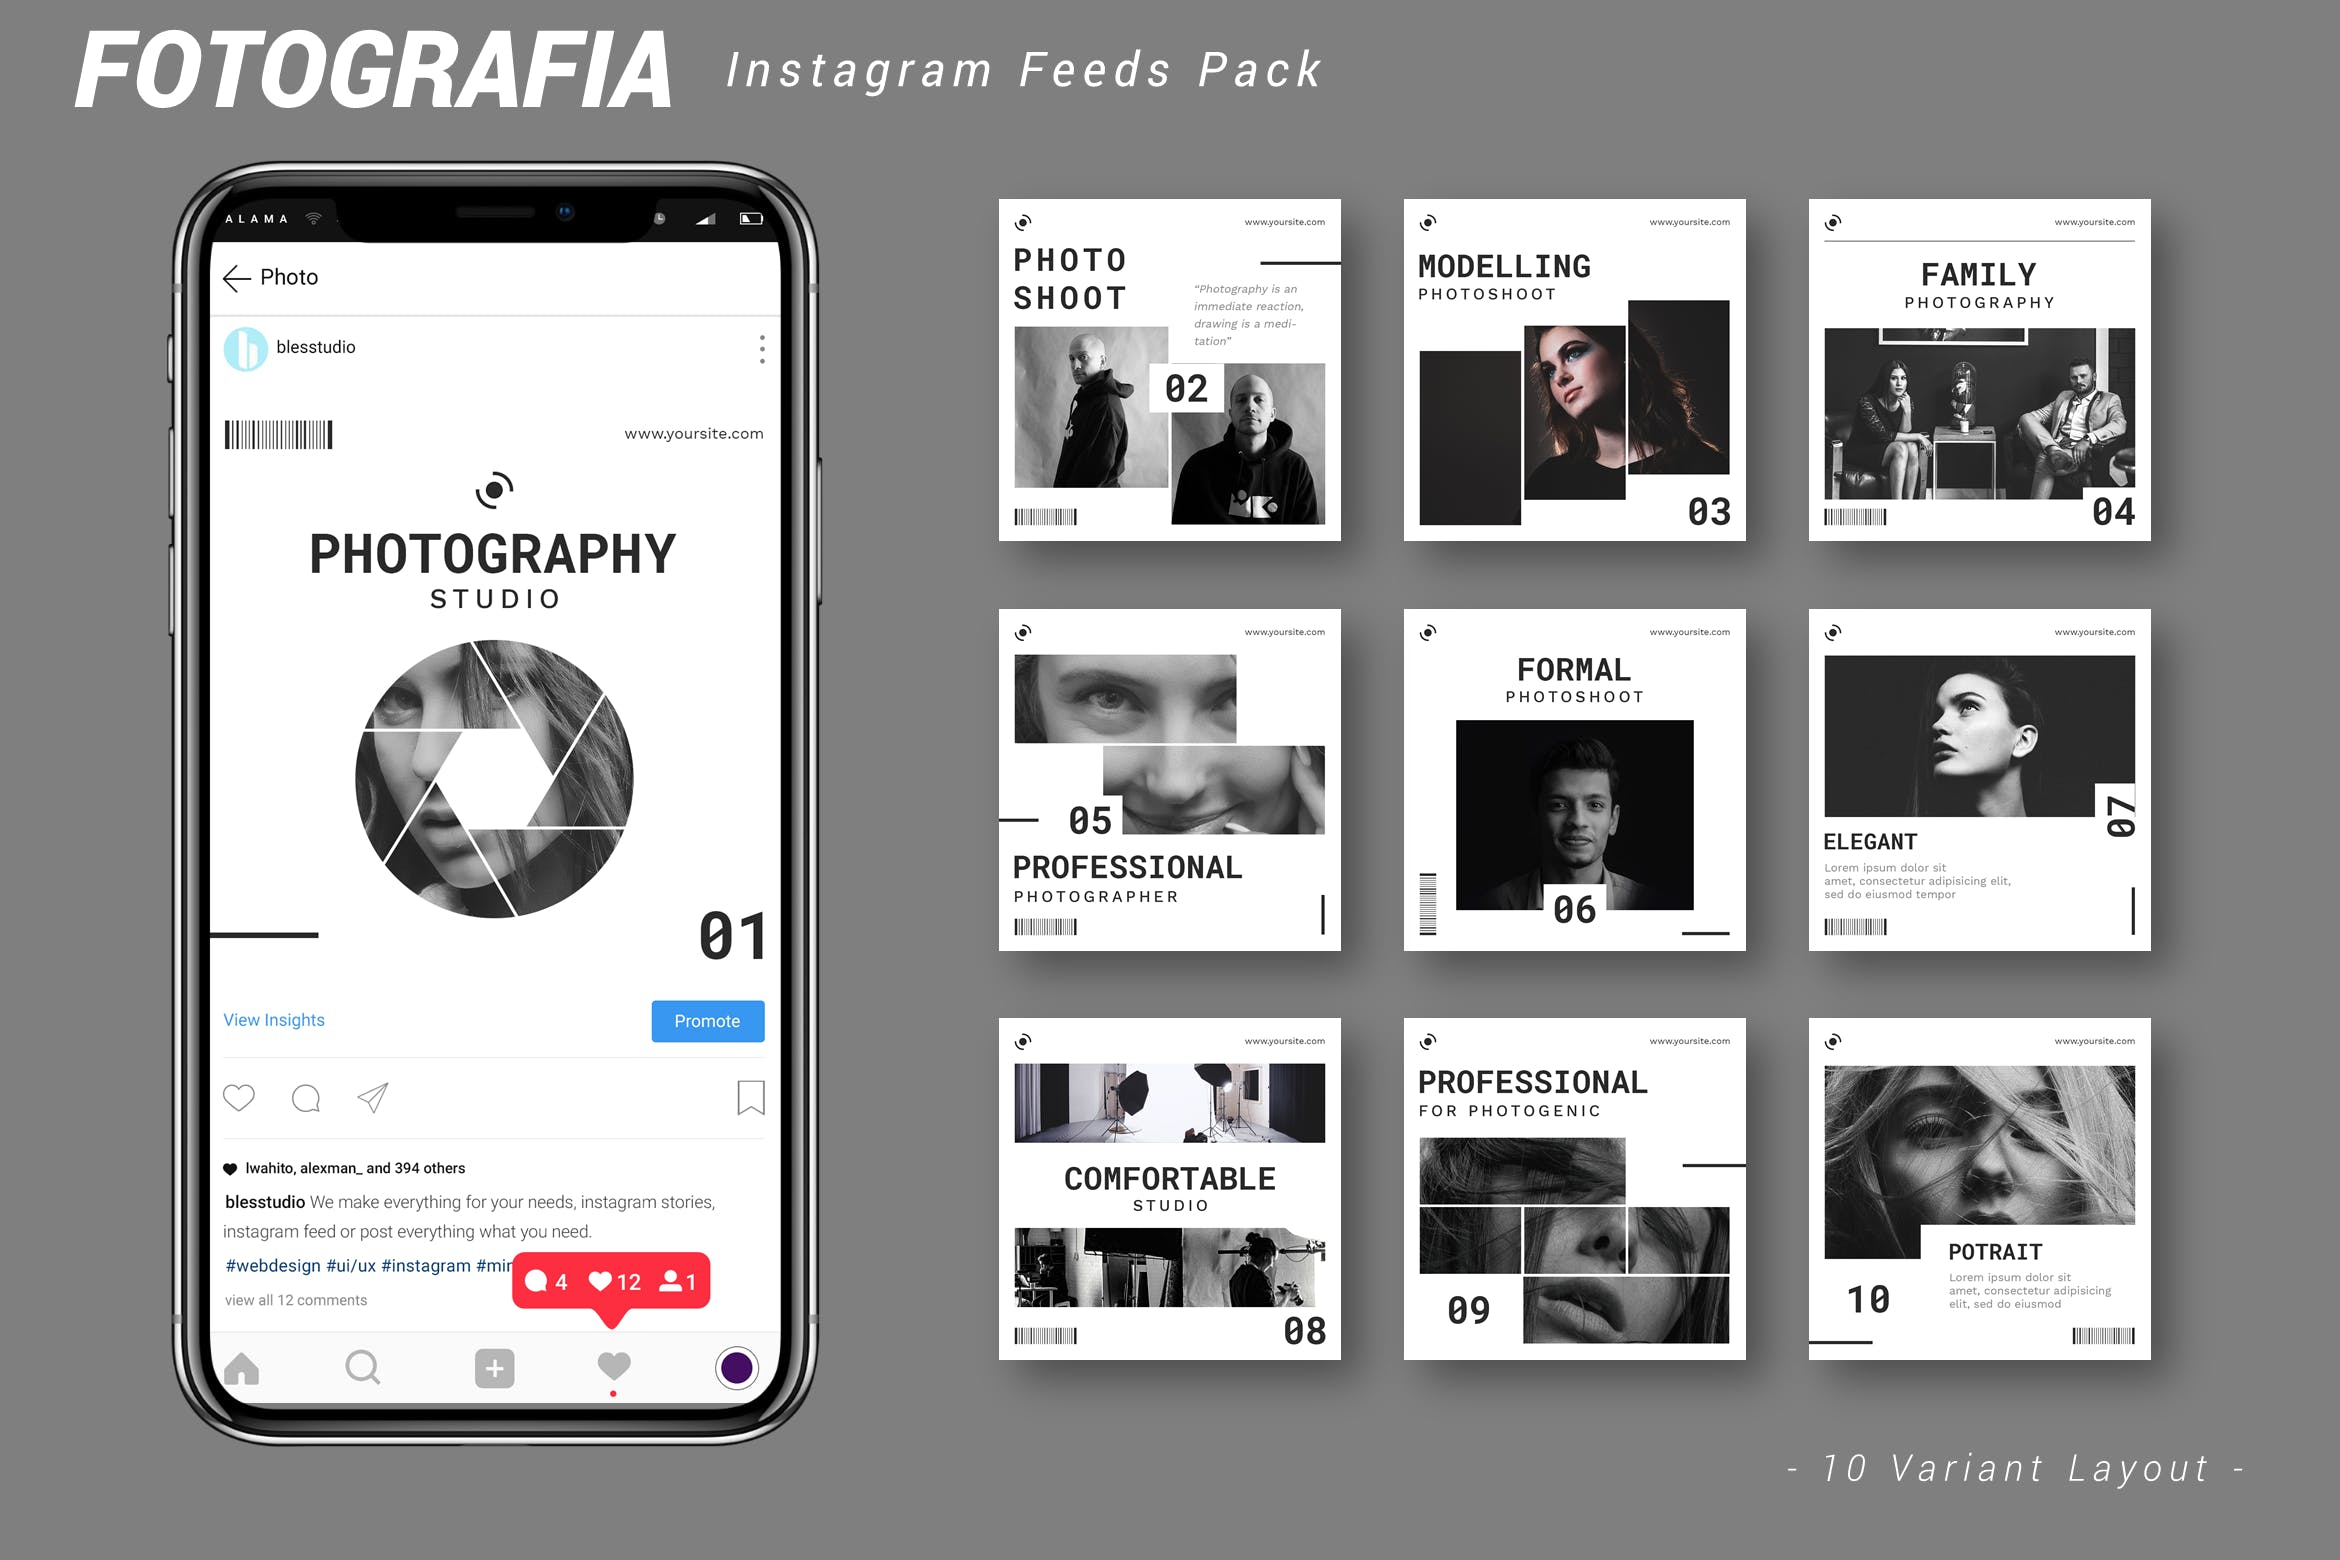 Instagram信息流黑白配色贴图设计模板16图库精选 Fotografia – Instagram Feeds Pack插图